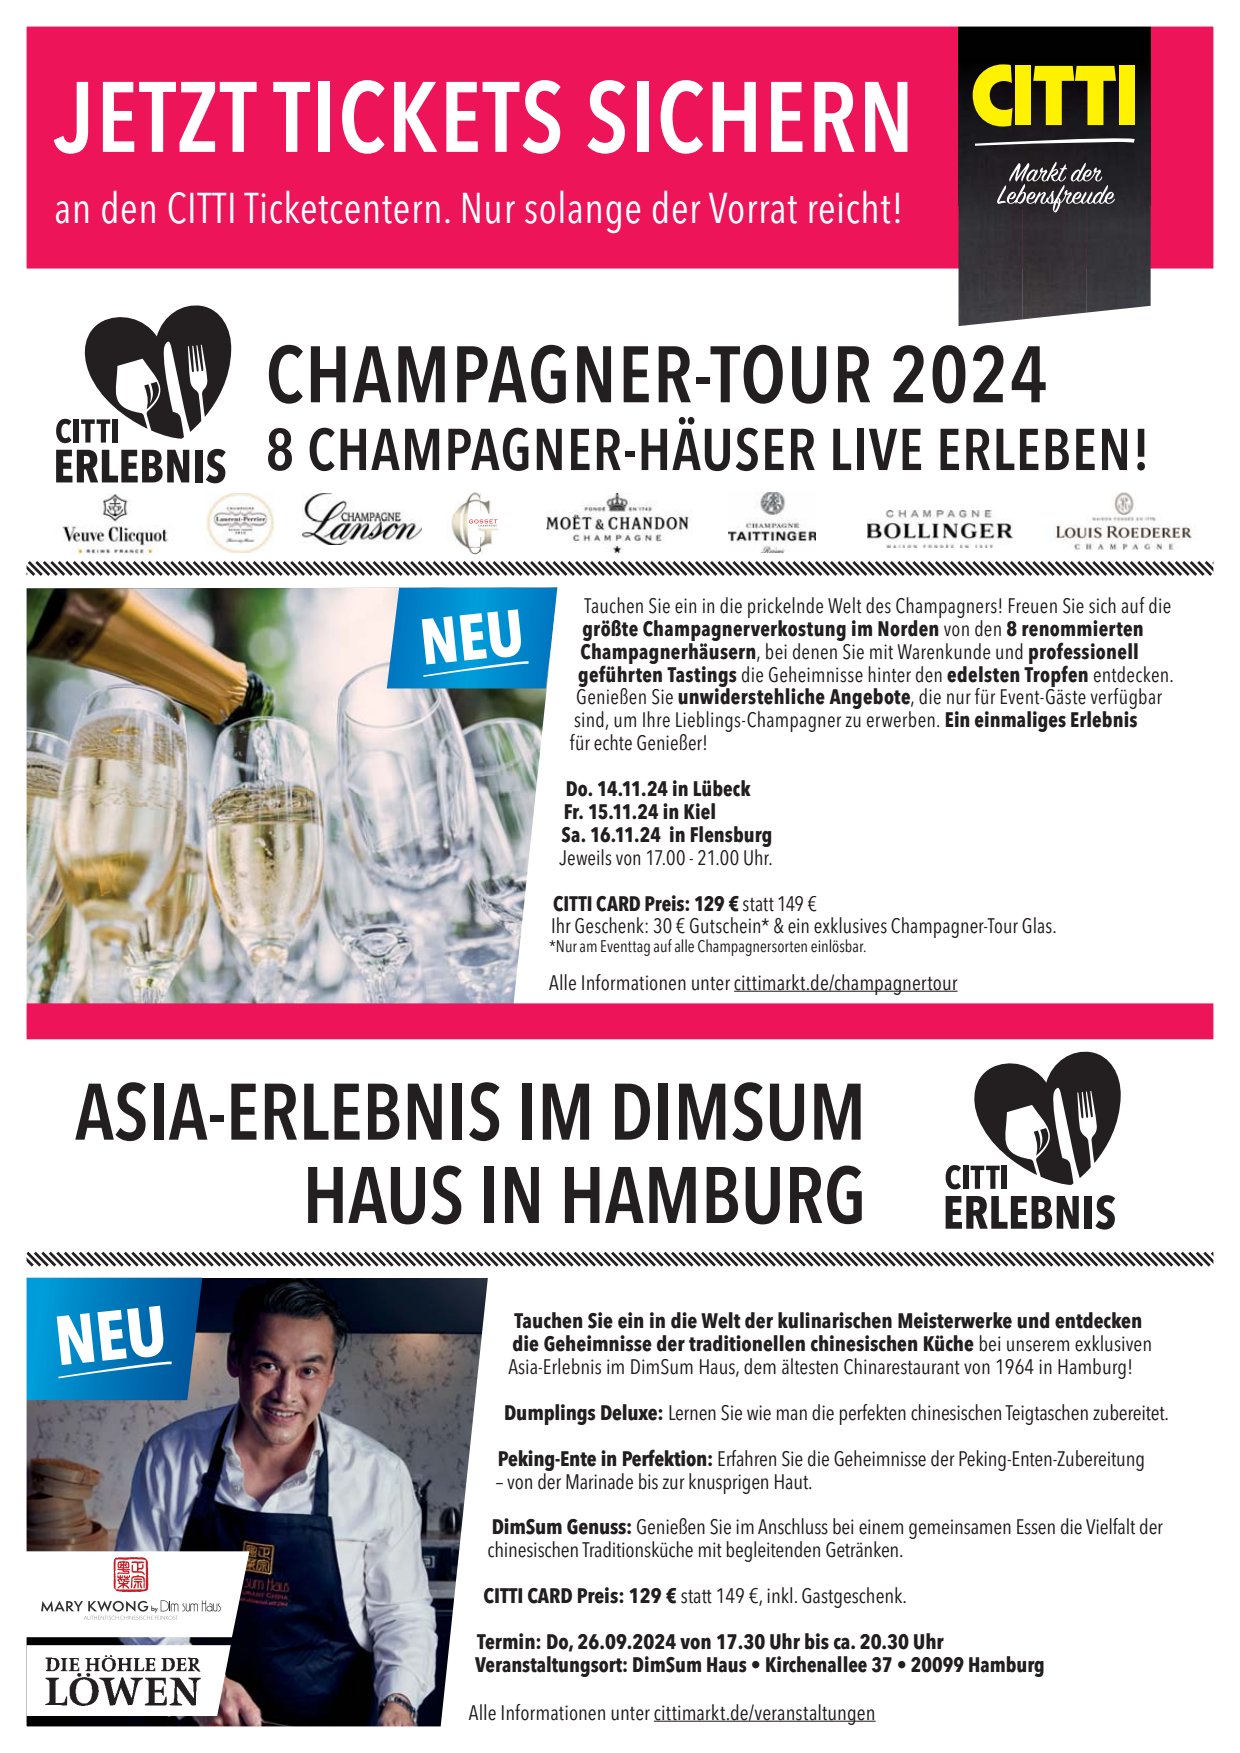 CITTI ERLEBNIS Champagner-Tour 2024